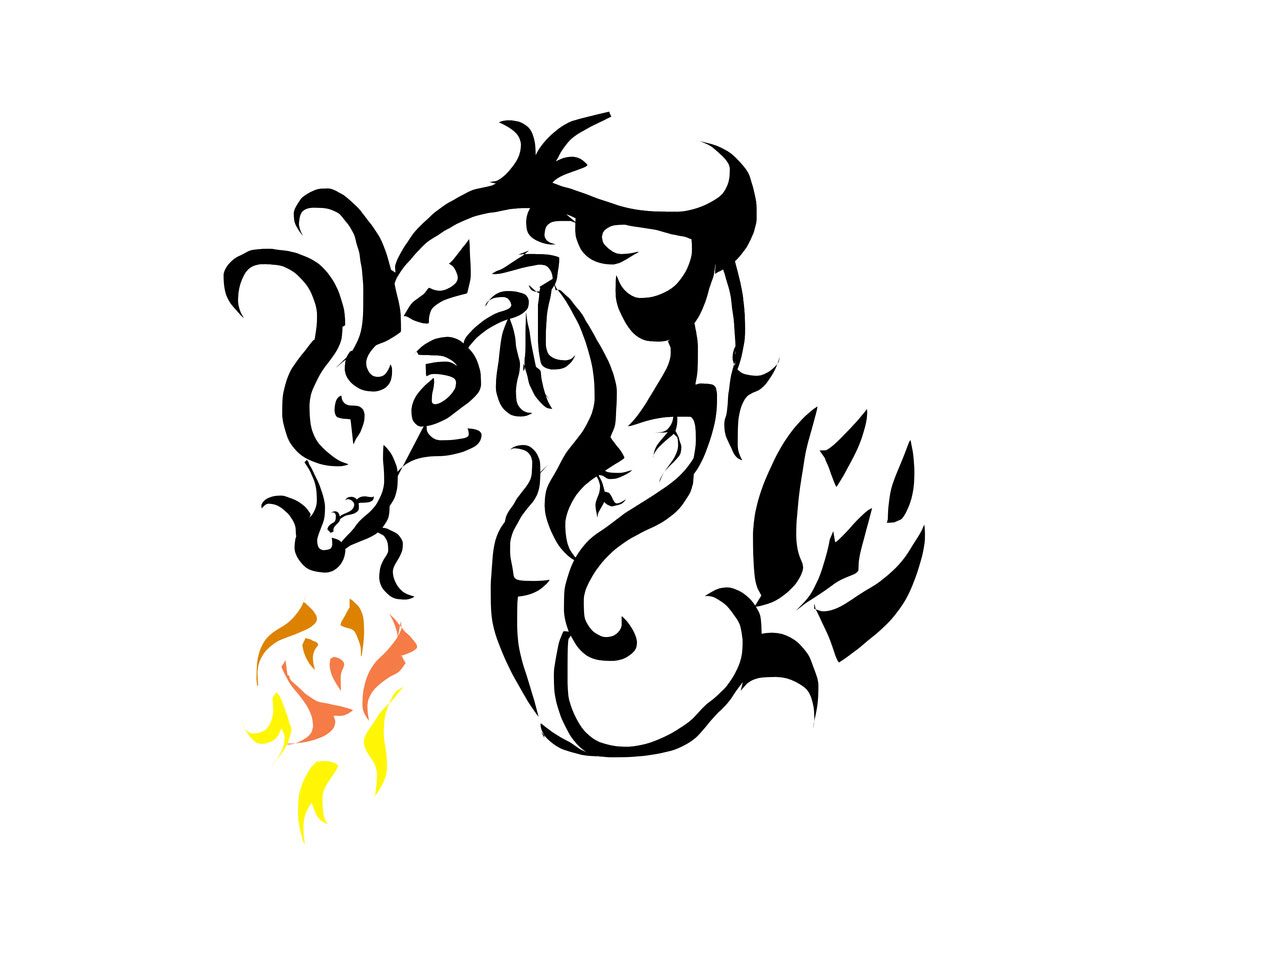 Free designs - Tribal dragon and fire tattoo wallpaper